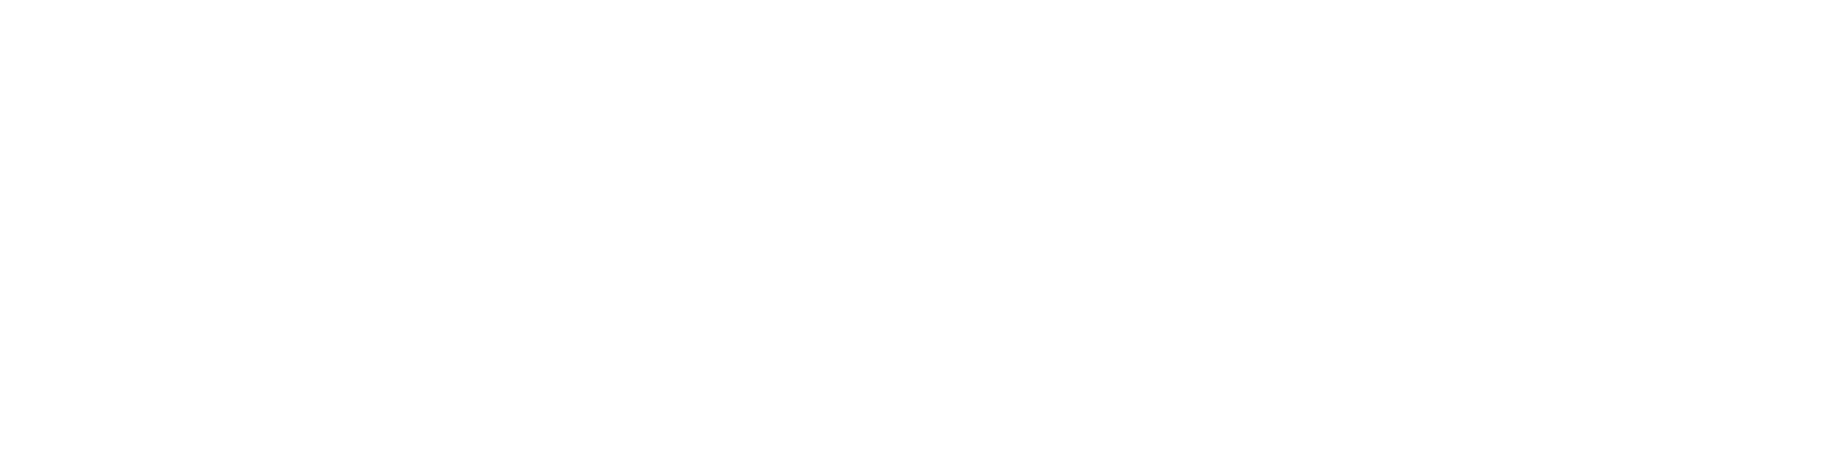 A-Test banner